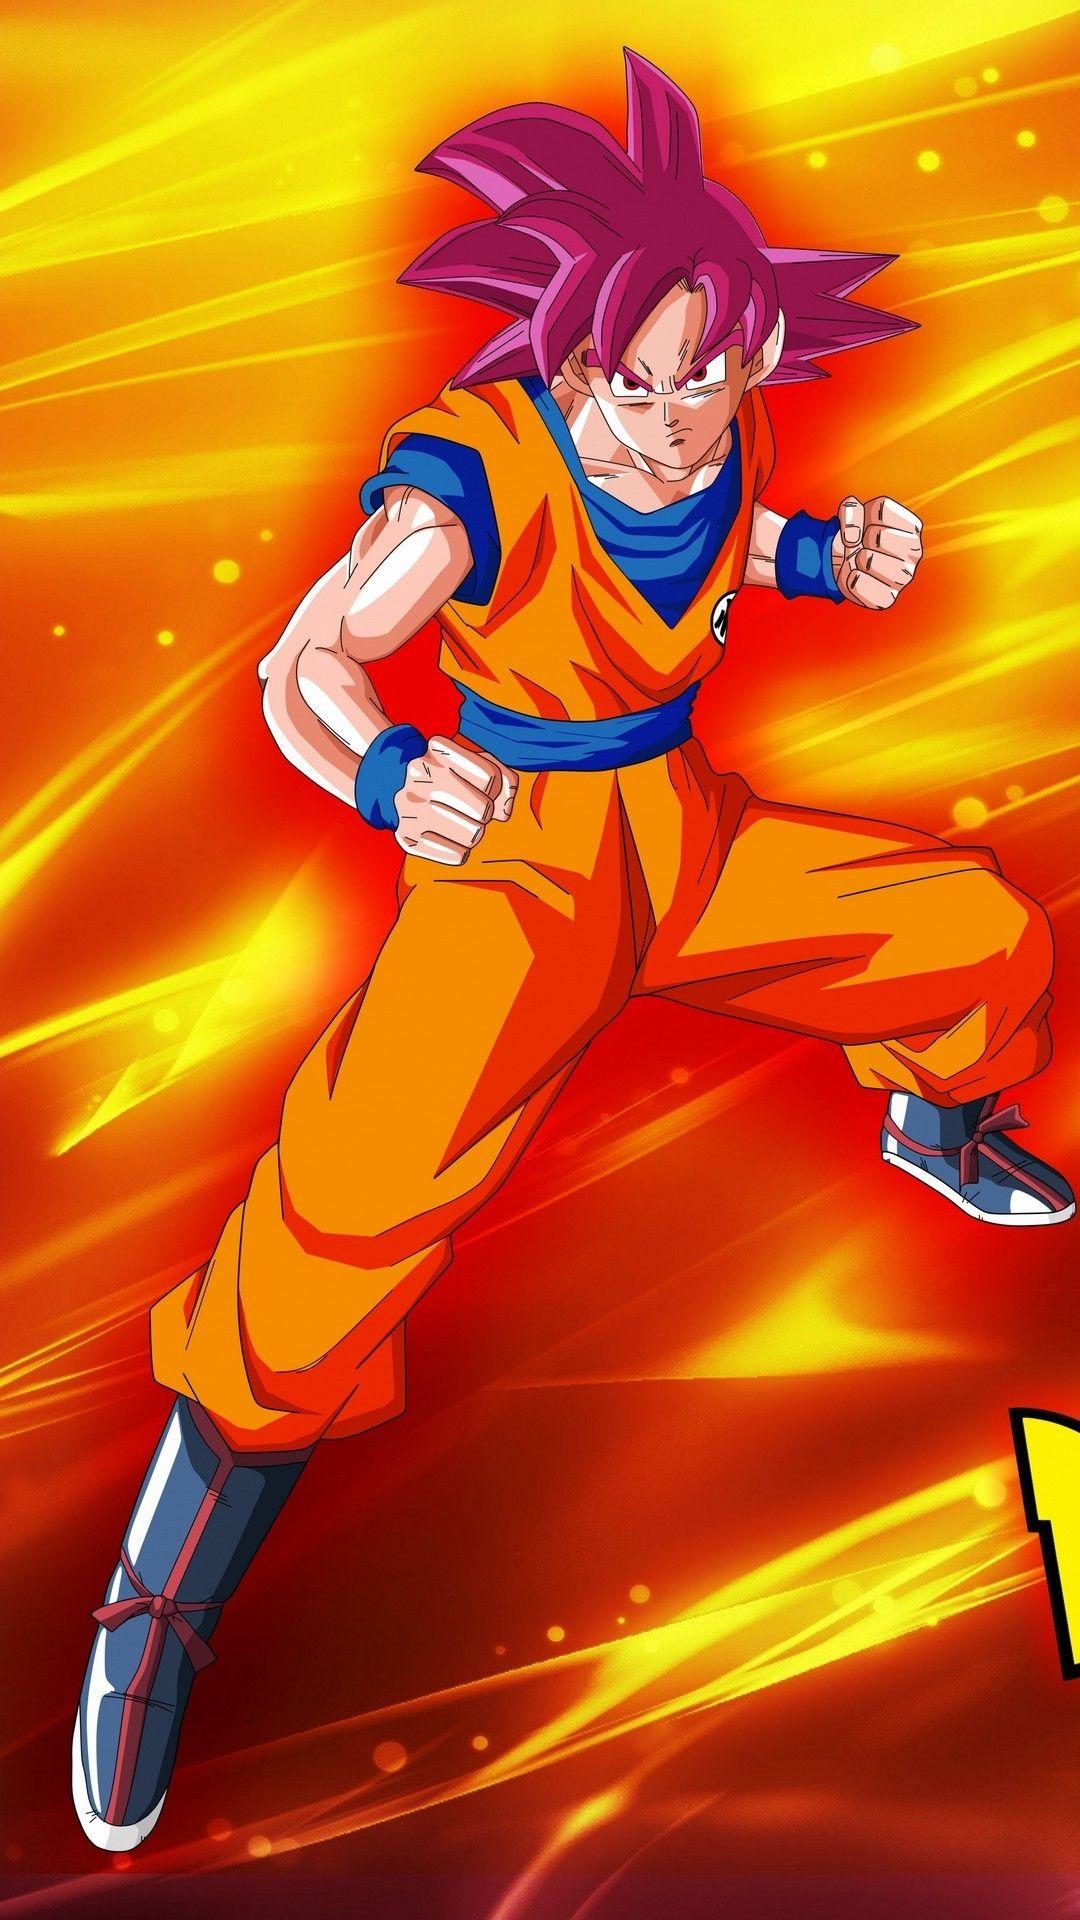 1080x1920 Goku Super Saiyan God Wallpaper Android - 2019 Android